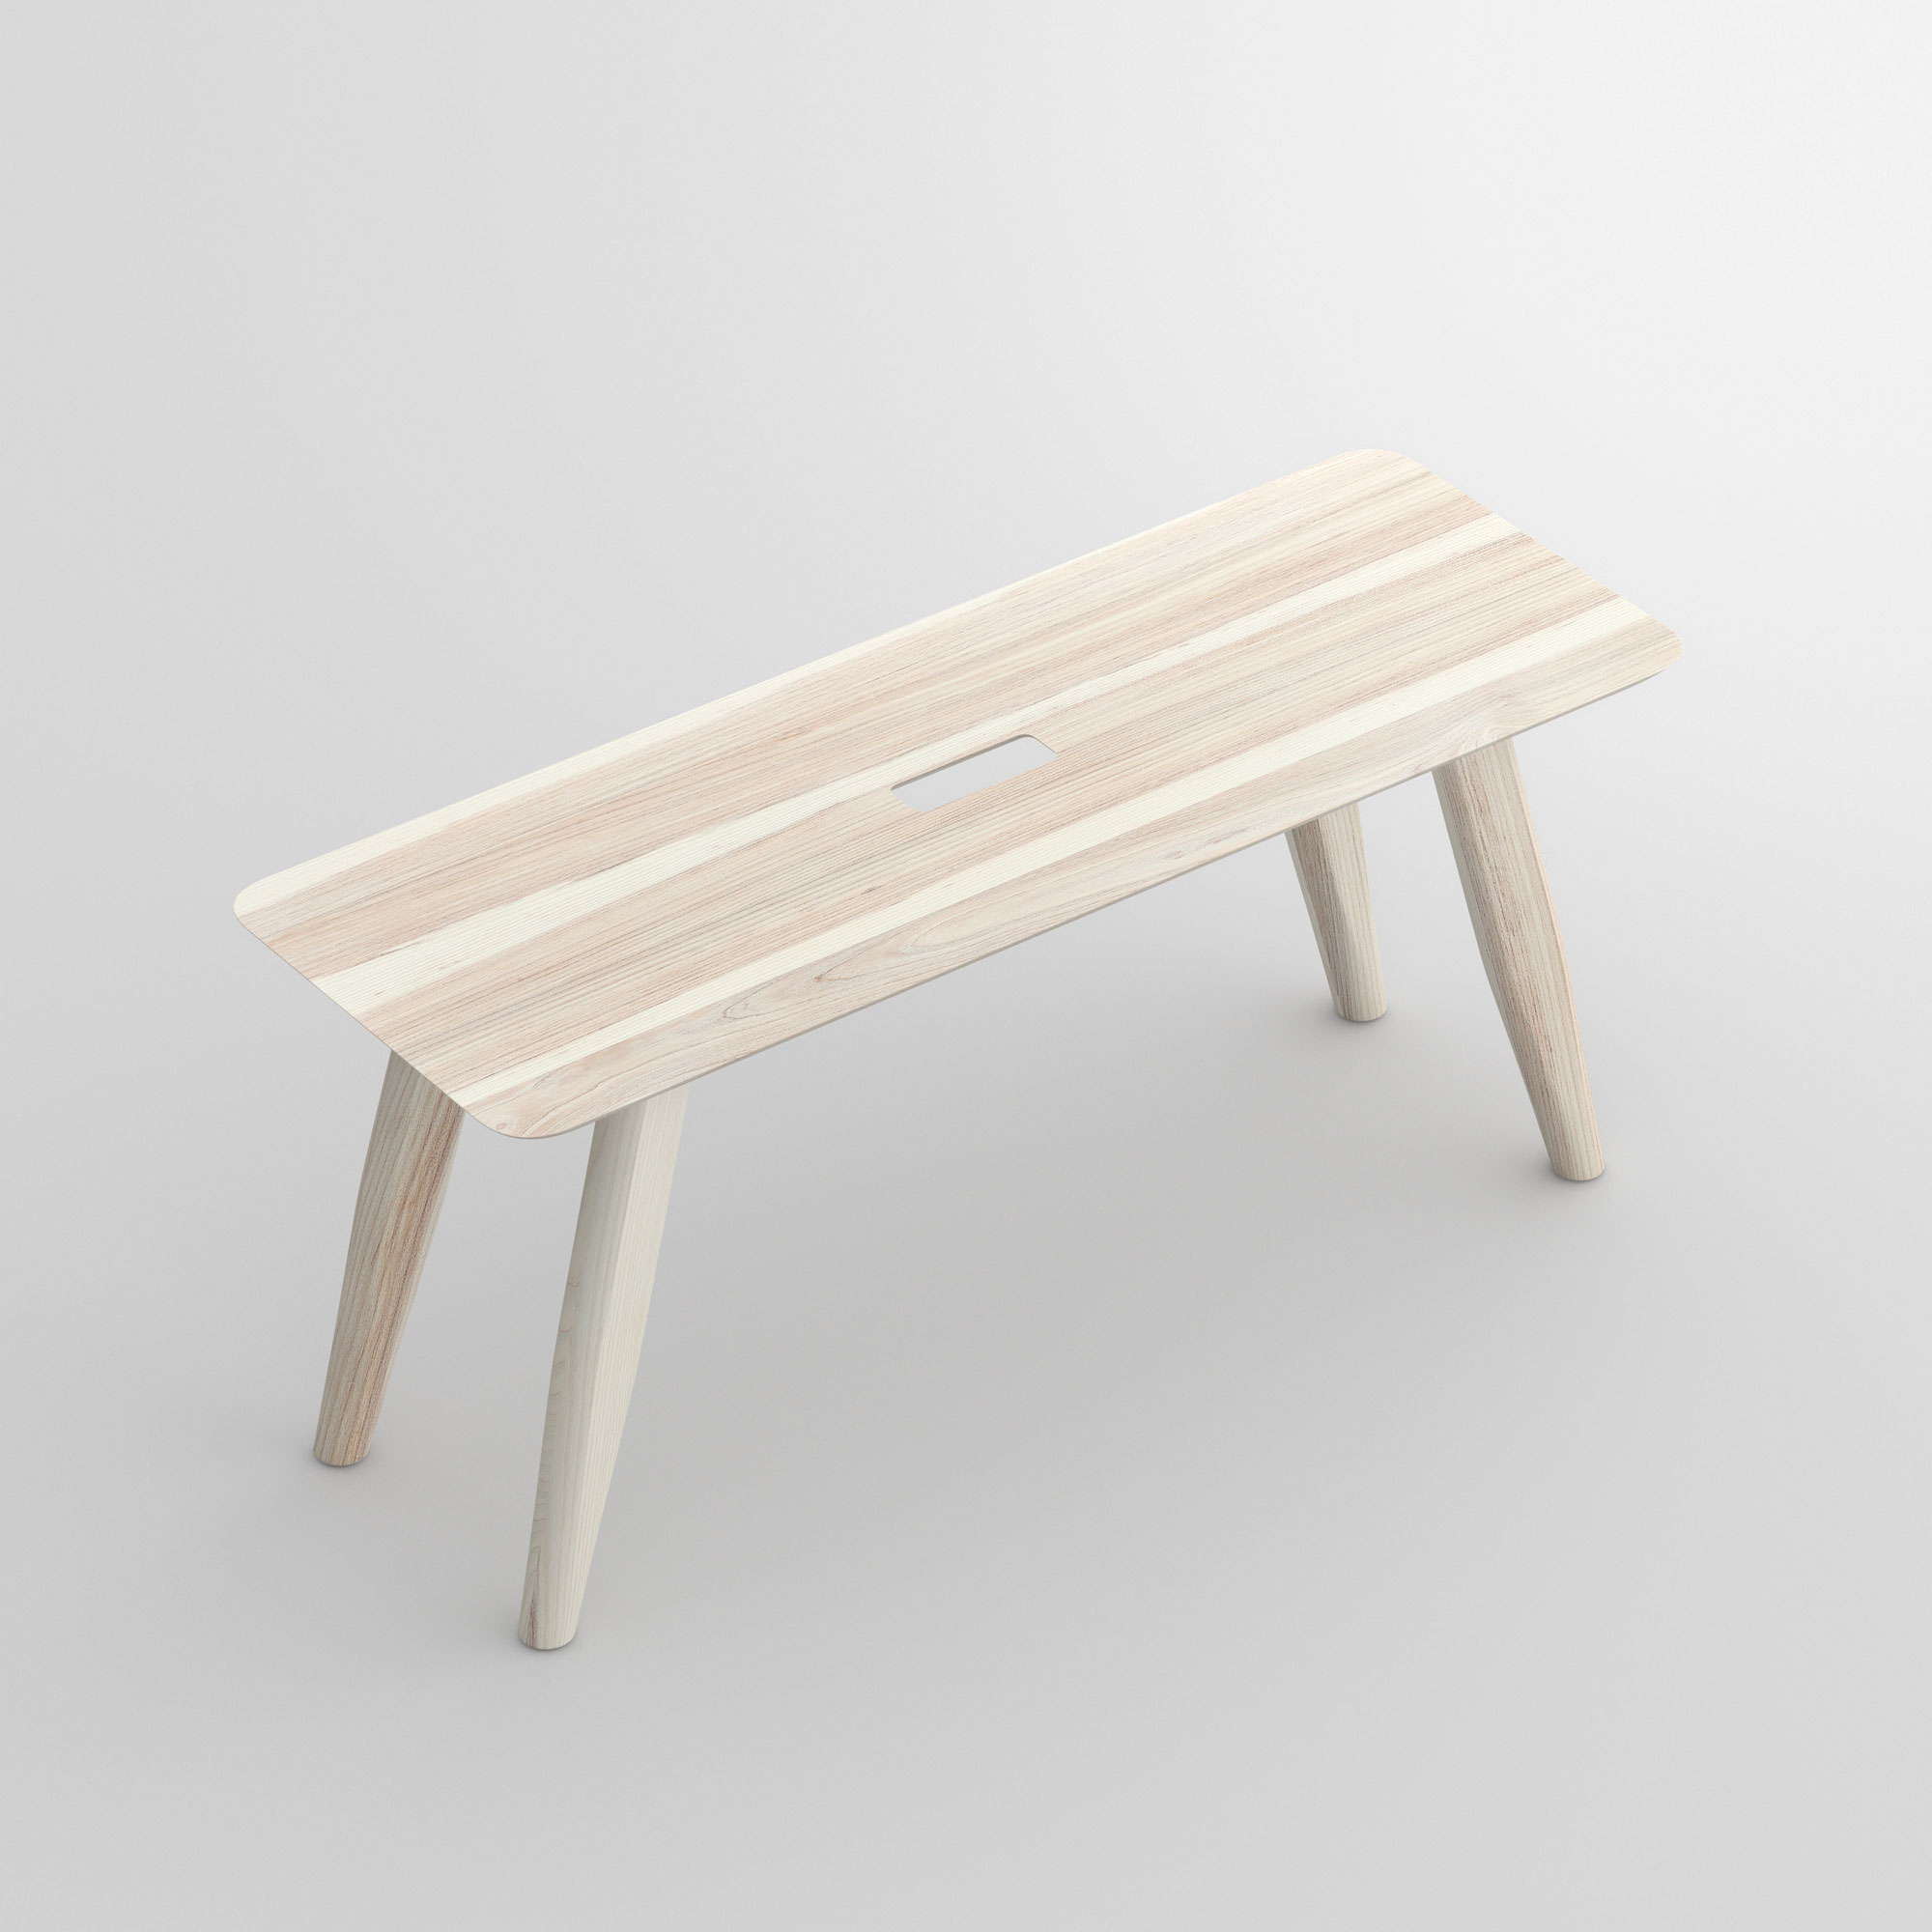 Designer Bench AETAS cam1 custom made in solid wood by vitamin design